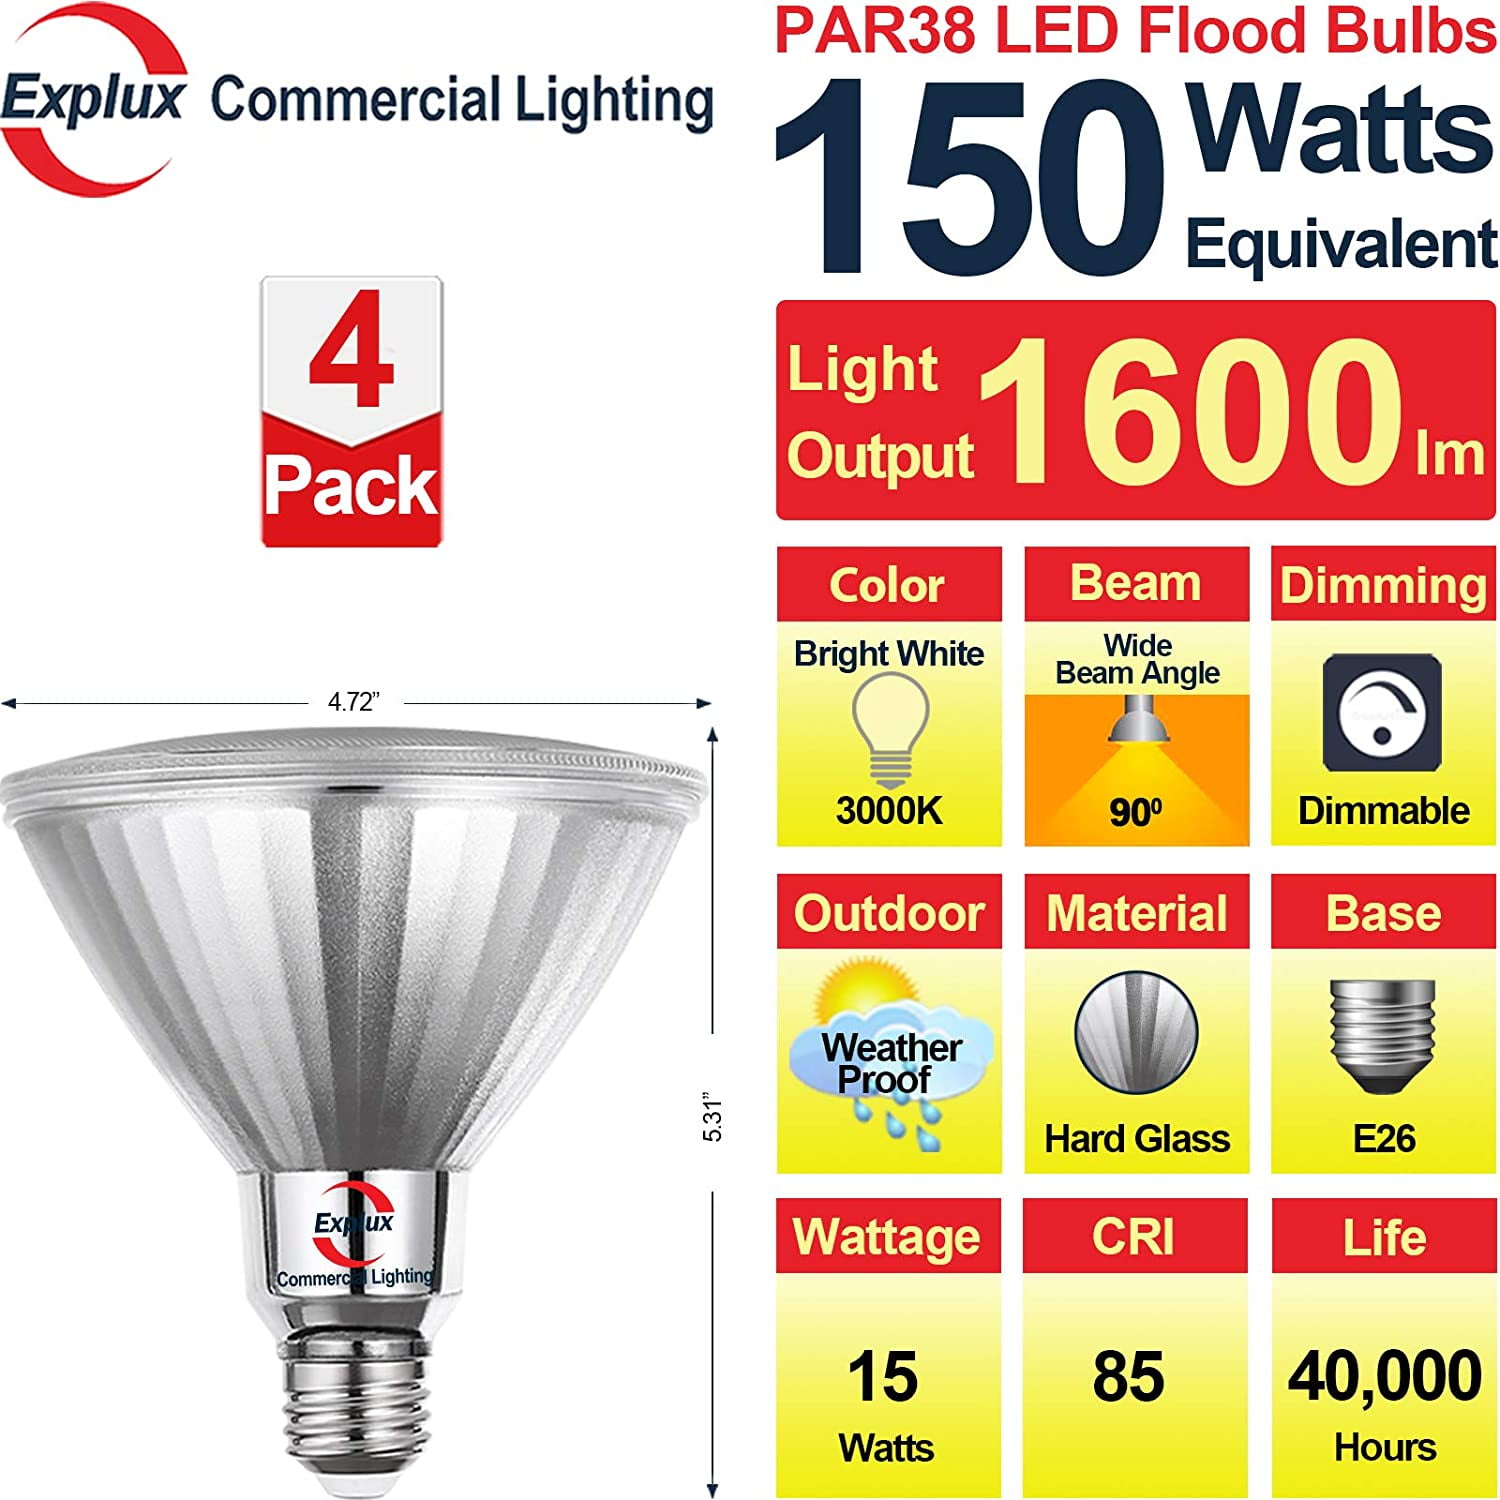 2400 Lumen 2-Pack 2700K Soft White 250W Equivalent Explux Outdoor PAR38 LED Flood Light Bulbs Full Glass Weatherproof & Anti-Ageing Dimmable 